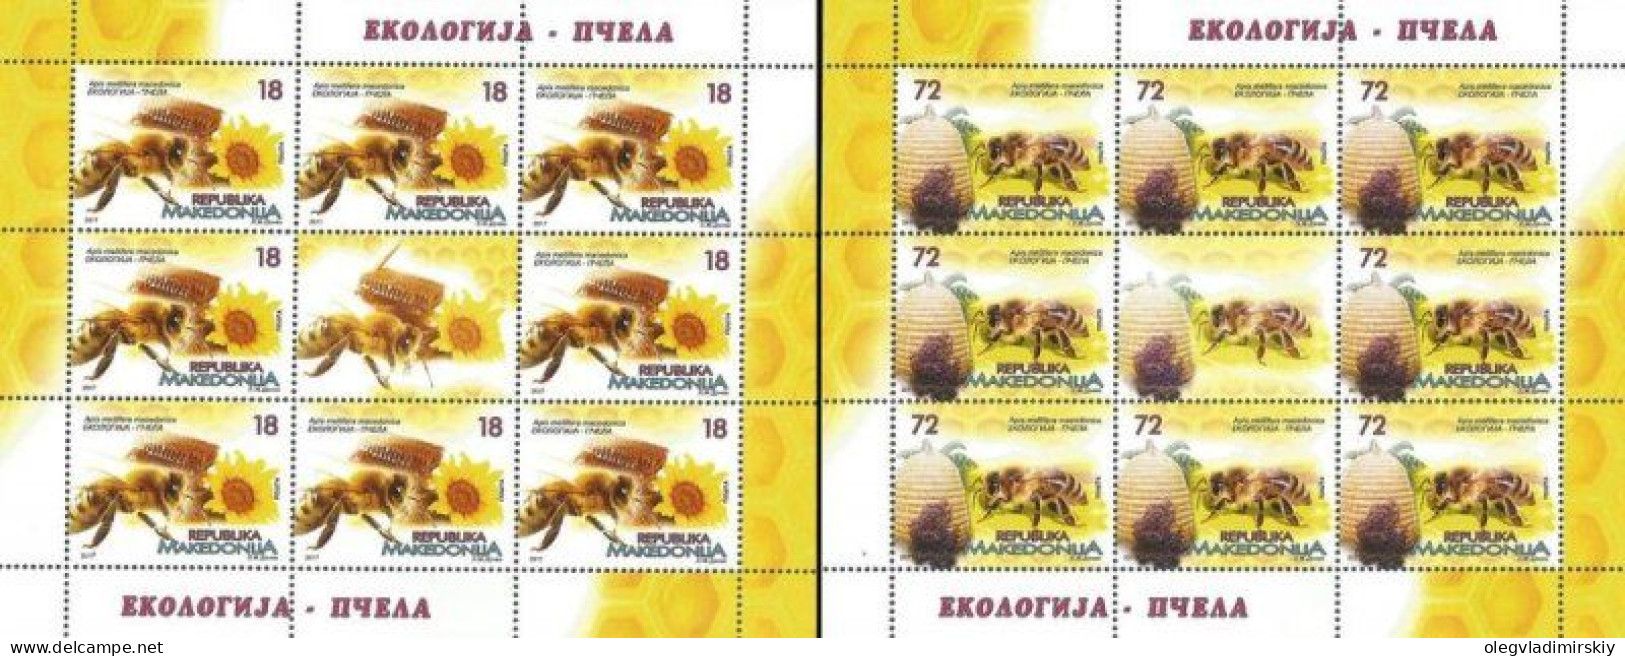 Macedonia 2017 Honey Bees Set Of 2 Sheetlets With Labels MNH - Honingbijen